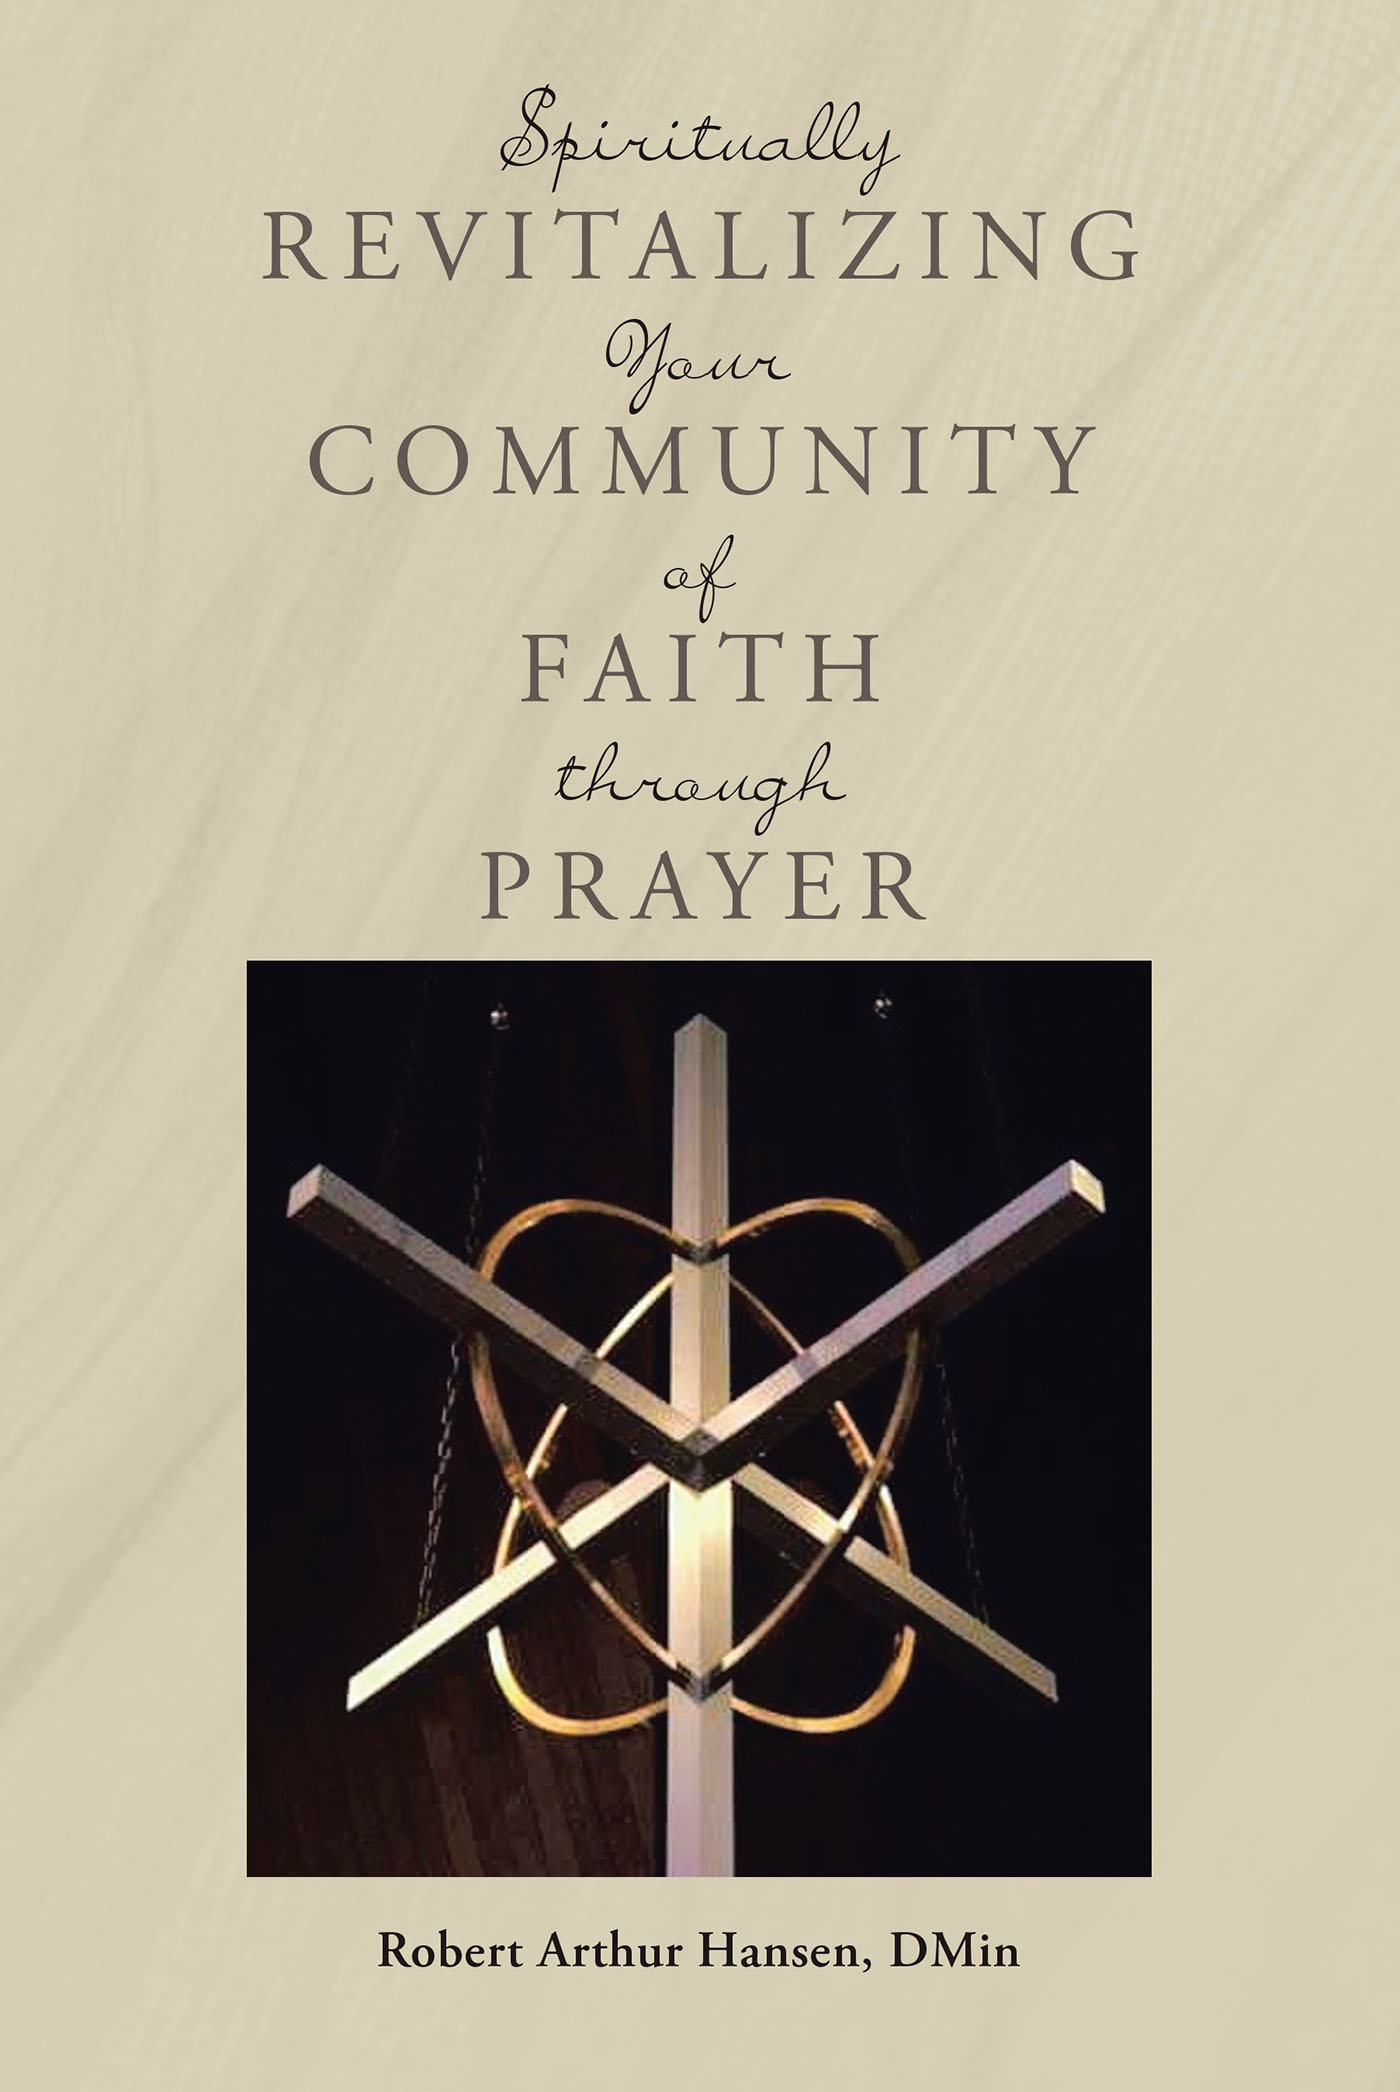 Author Robert Arthur Hansen, DMin’s New Book, "Spiritually Revitalizing Your Community of Faith through Prayer," Reveals How a Congregation Must Look Inward to Expand